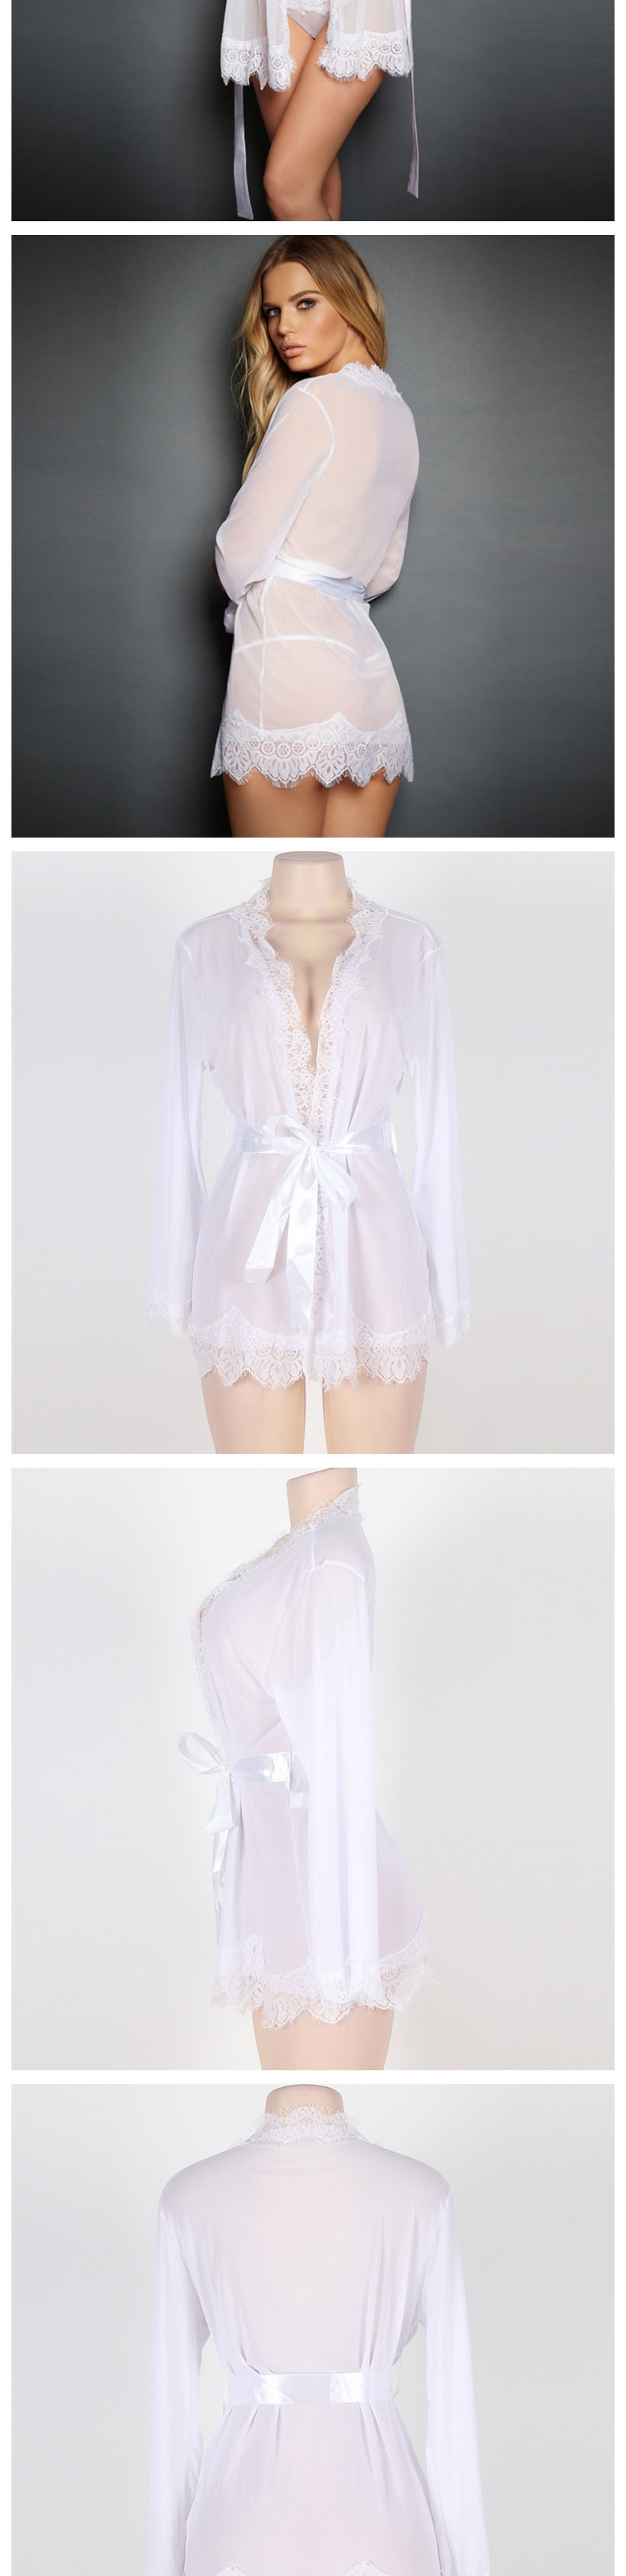 Fashion White Lace Open Chest Strappy Pajamas,SLEEPWEAR & UNDERWEAR